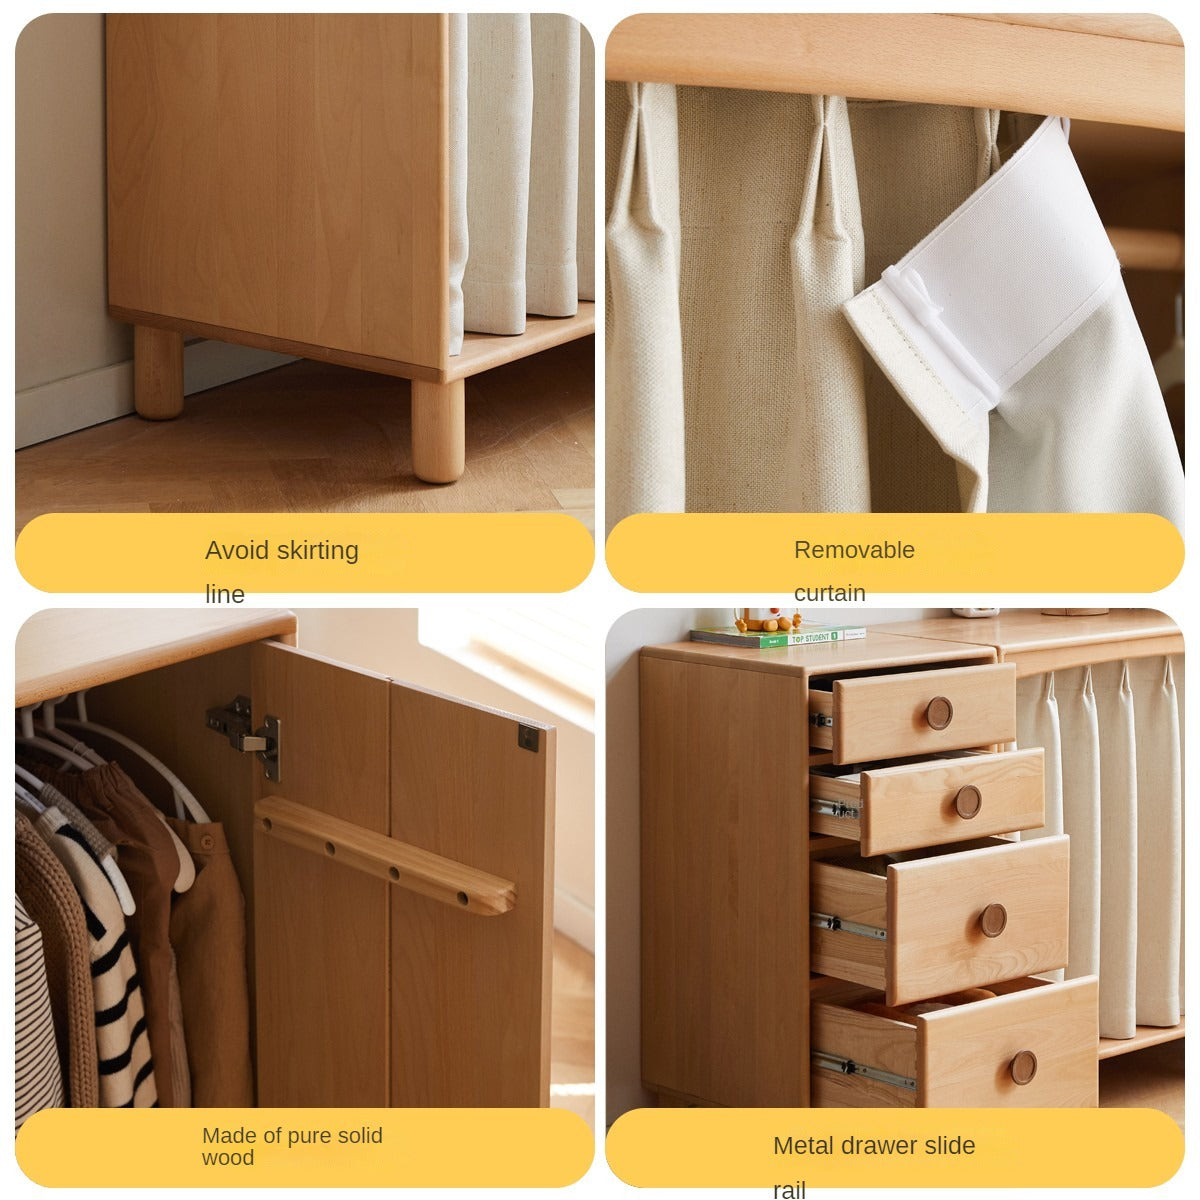 Beech Solid Wood Children's Wardrobe,Combination Storage Cabinet)